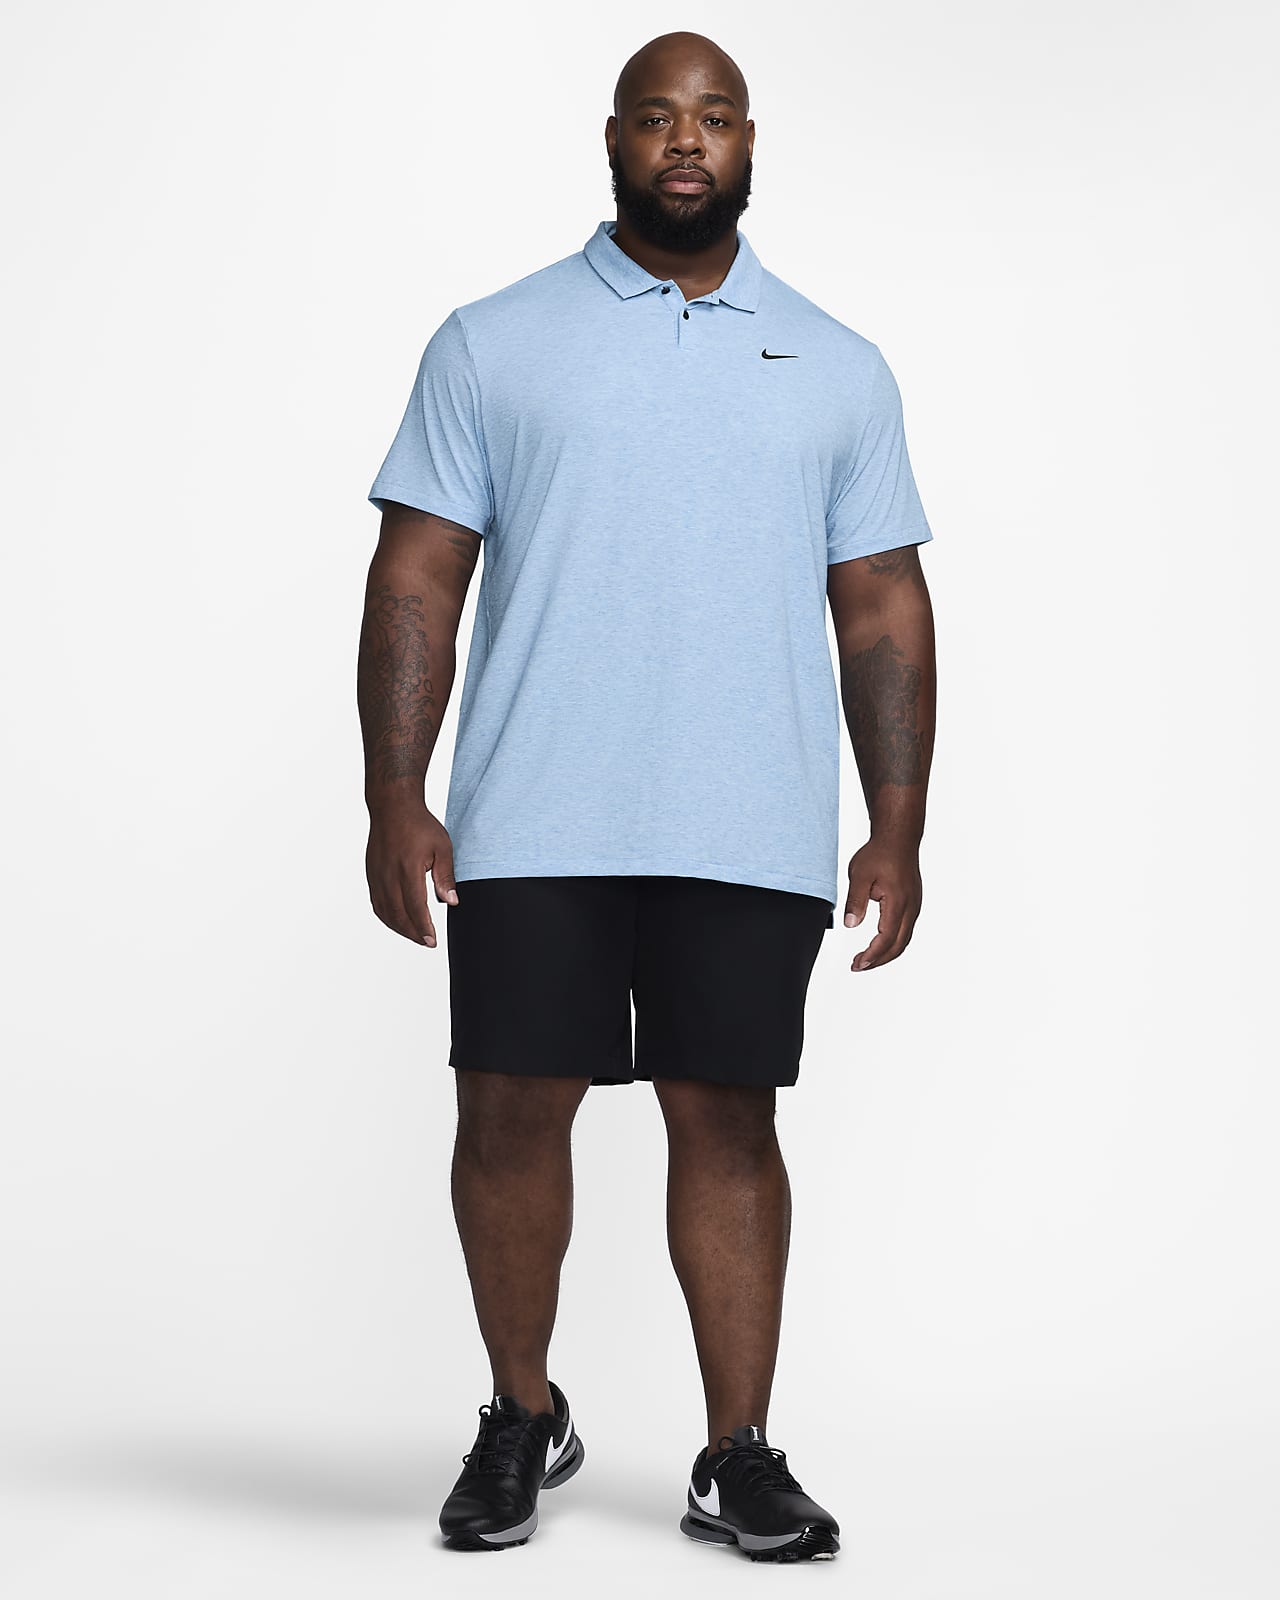 Last Hook Up - Men's Nike Golf Shirt, Polo Shirt